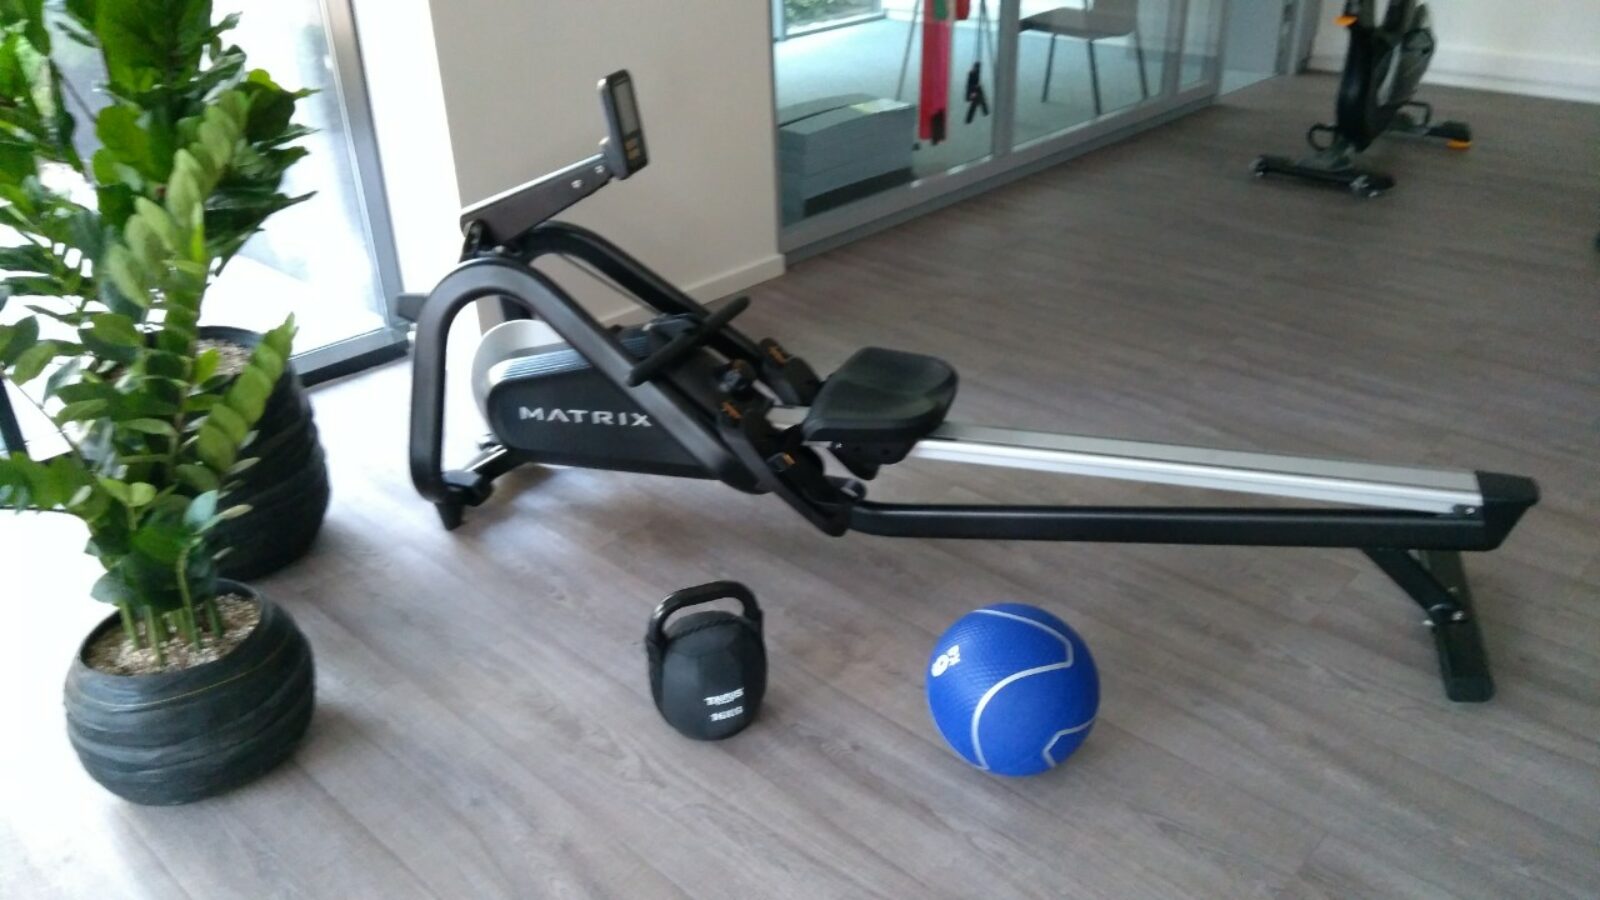 Fitness equipment